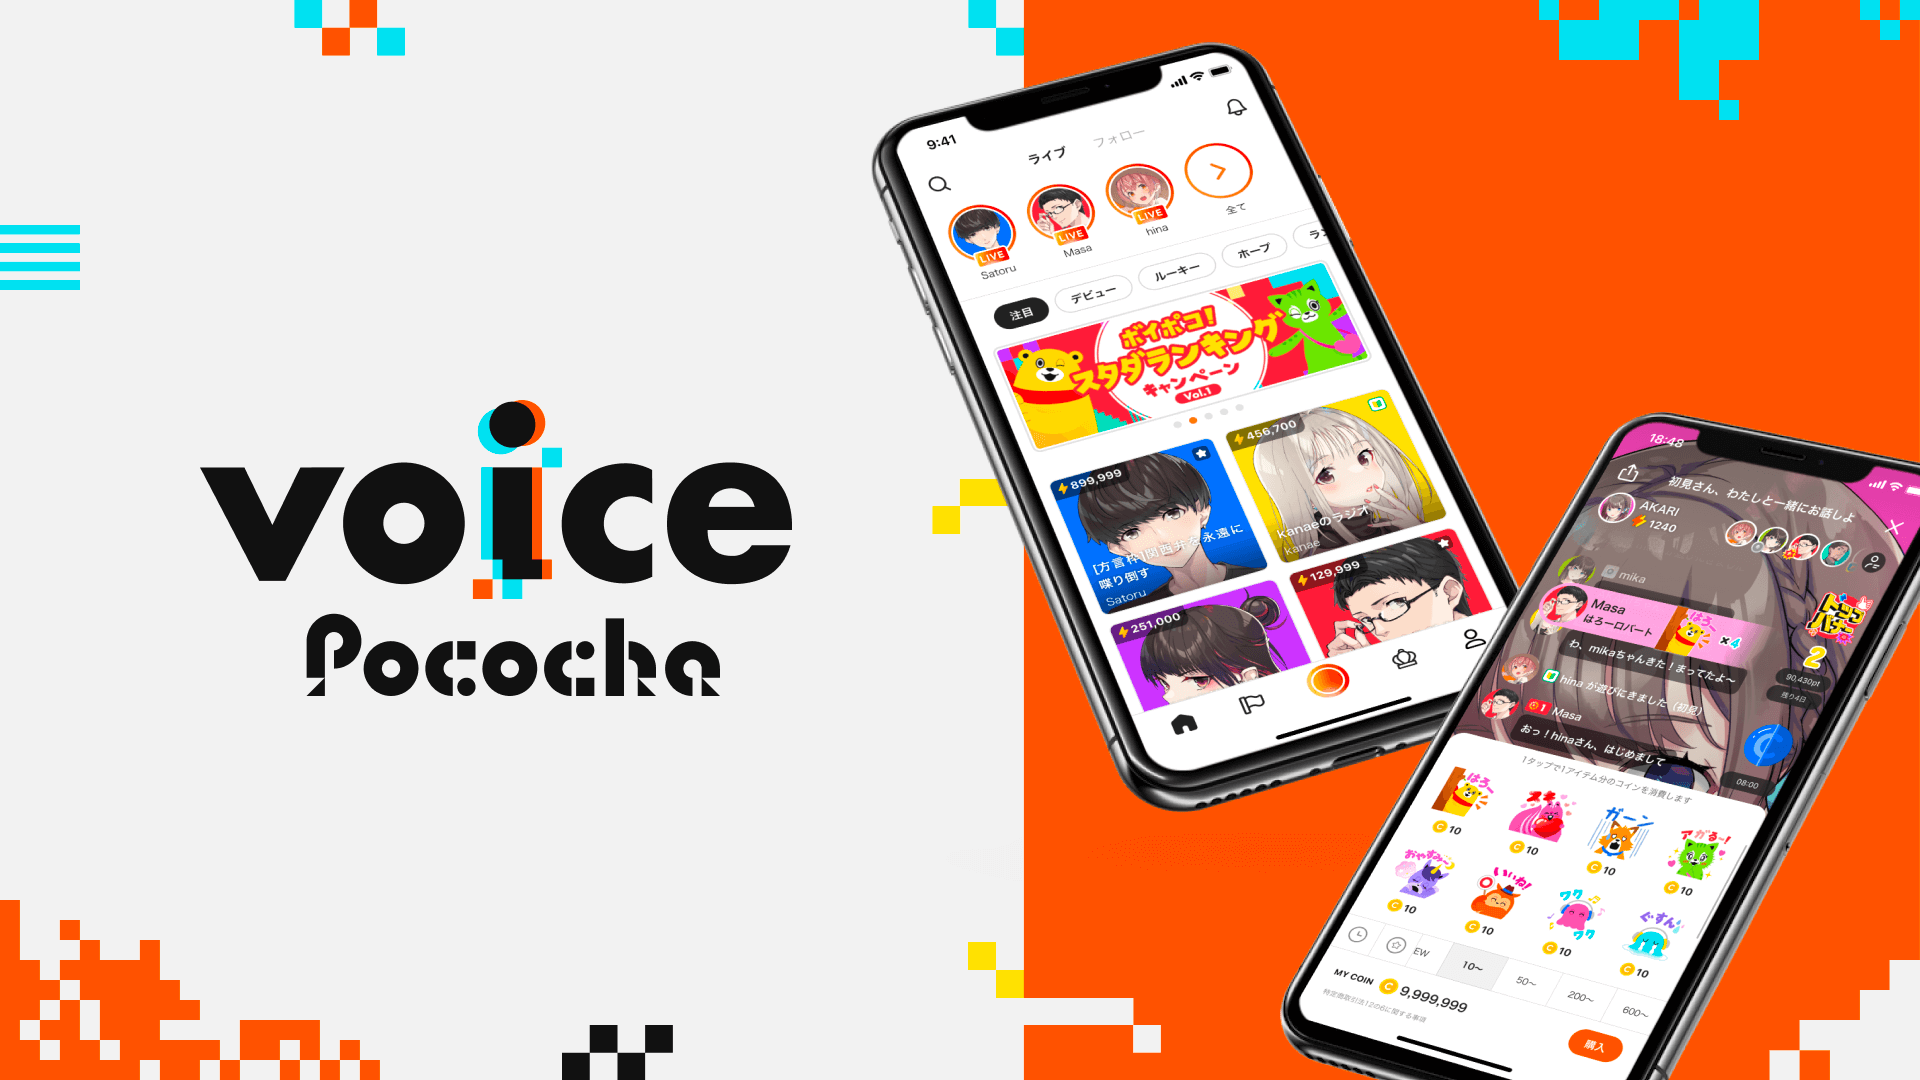 Voice Pocochaのキービジュアル画像